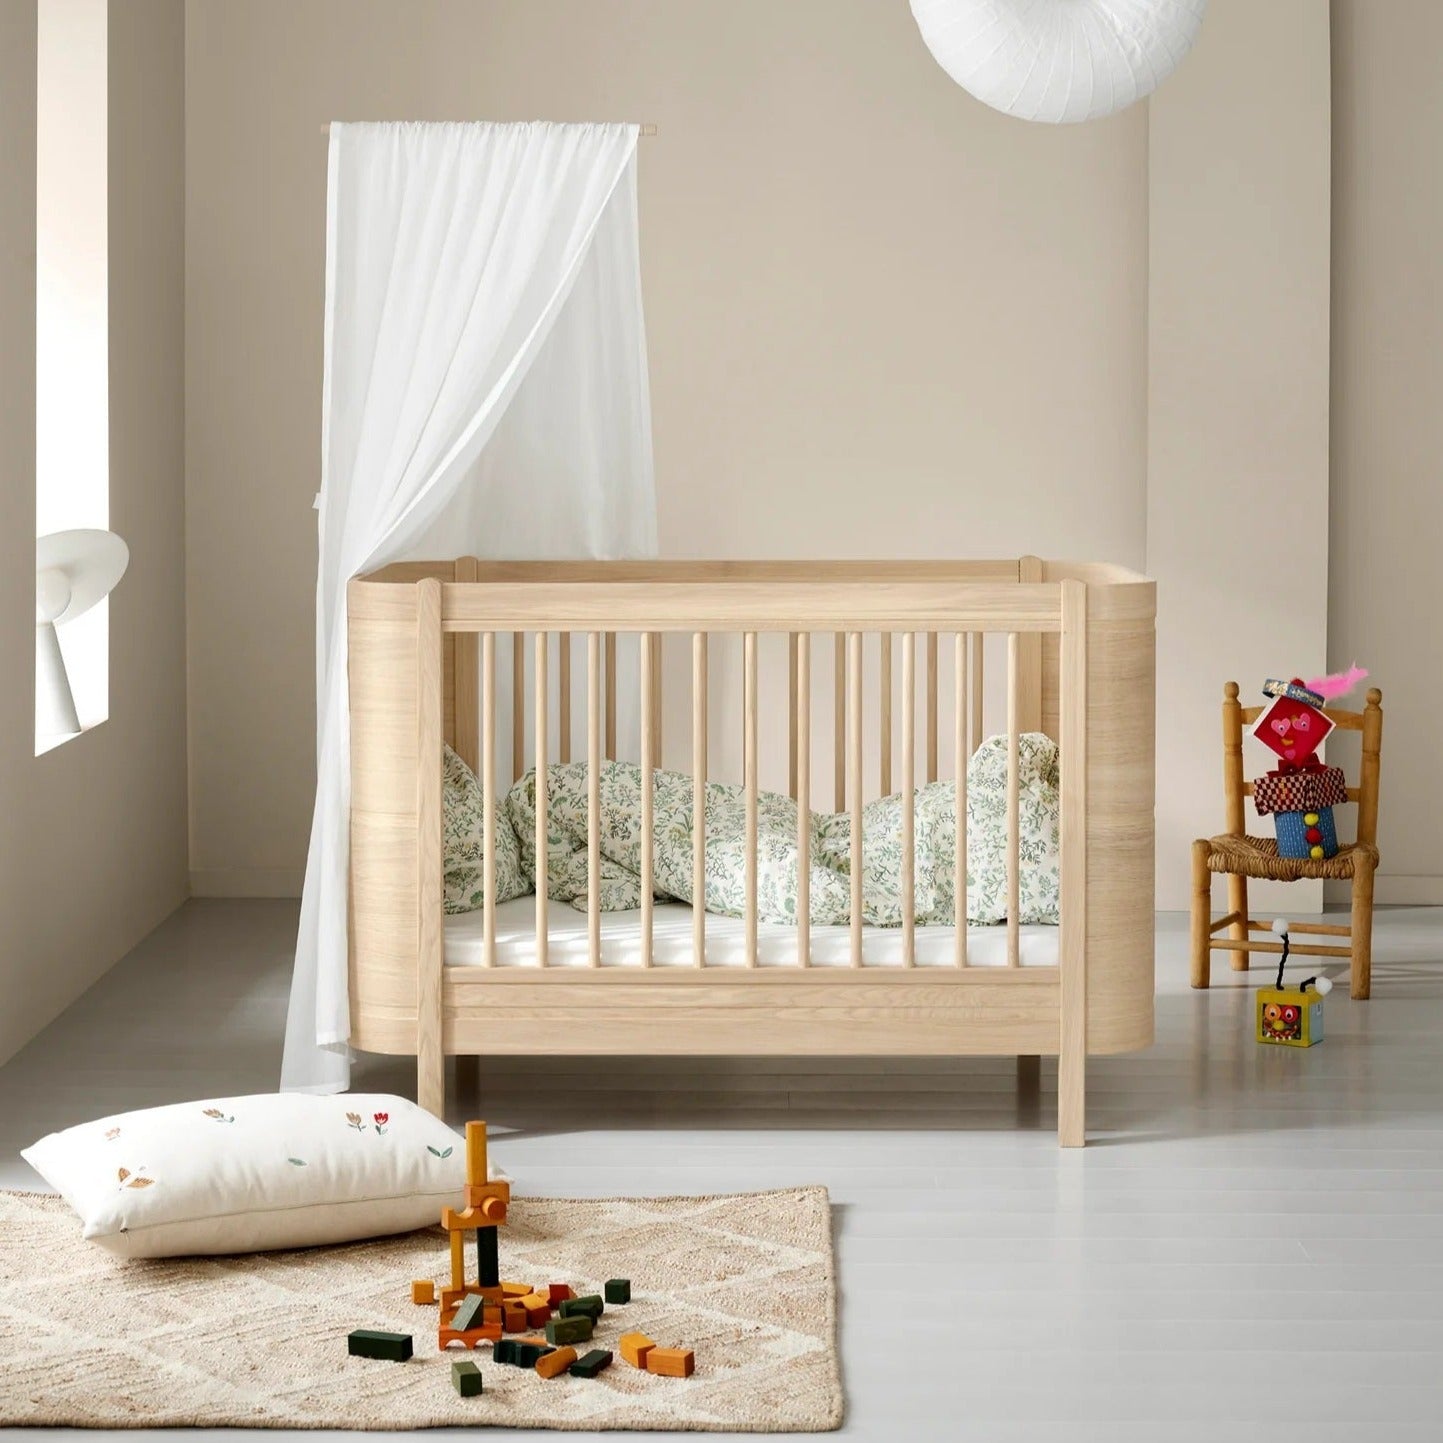 Oliver Furniture Wood Mini+ Cot Bed Excl. Junior Kit - Oak